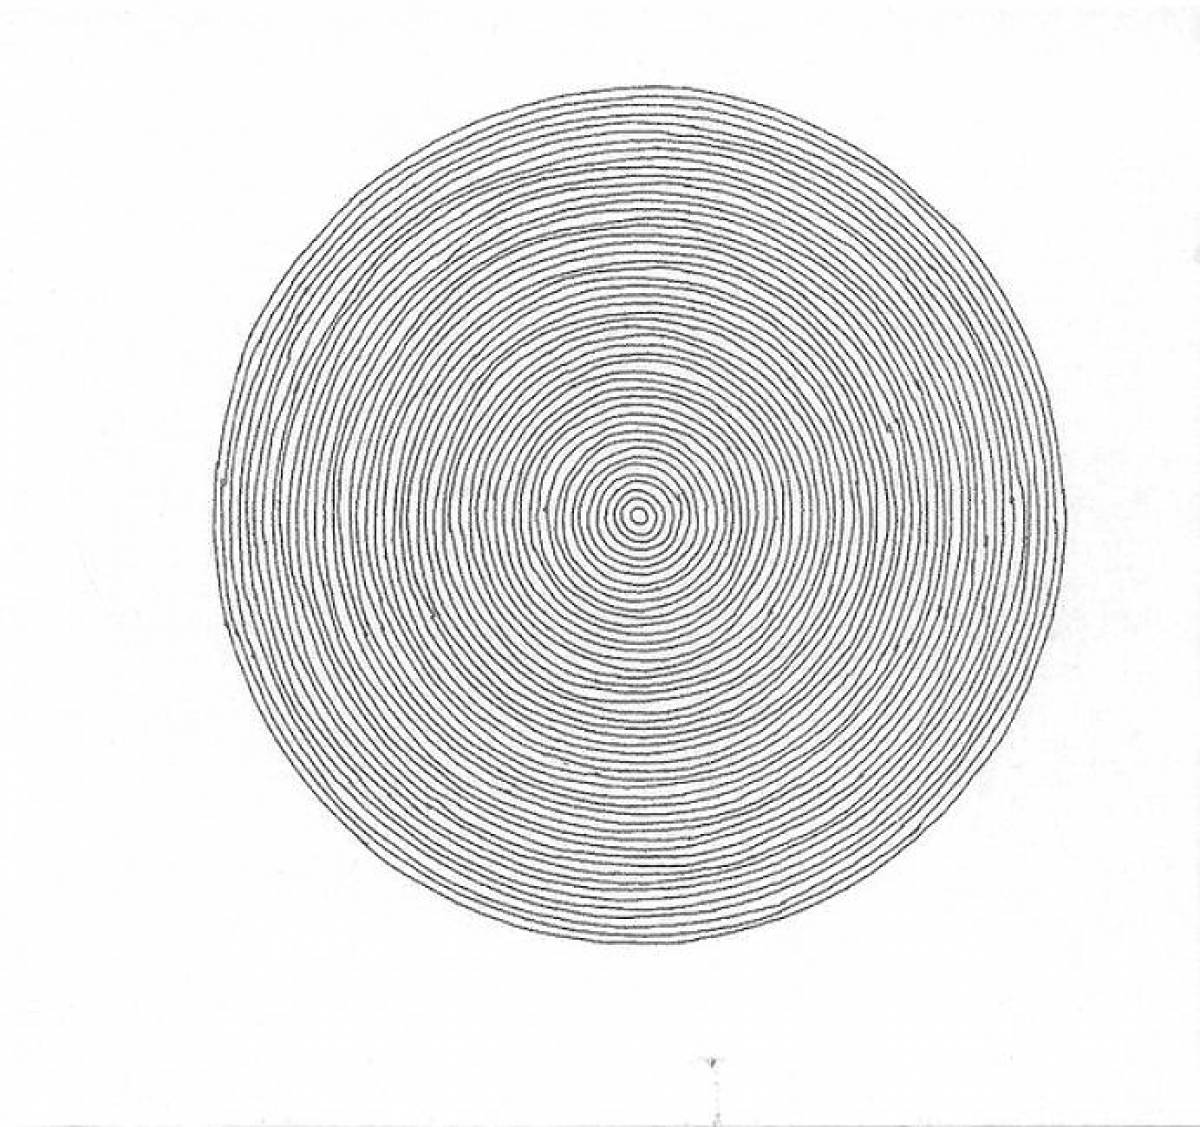 Ослепительная круглая спиральная раскраска